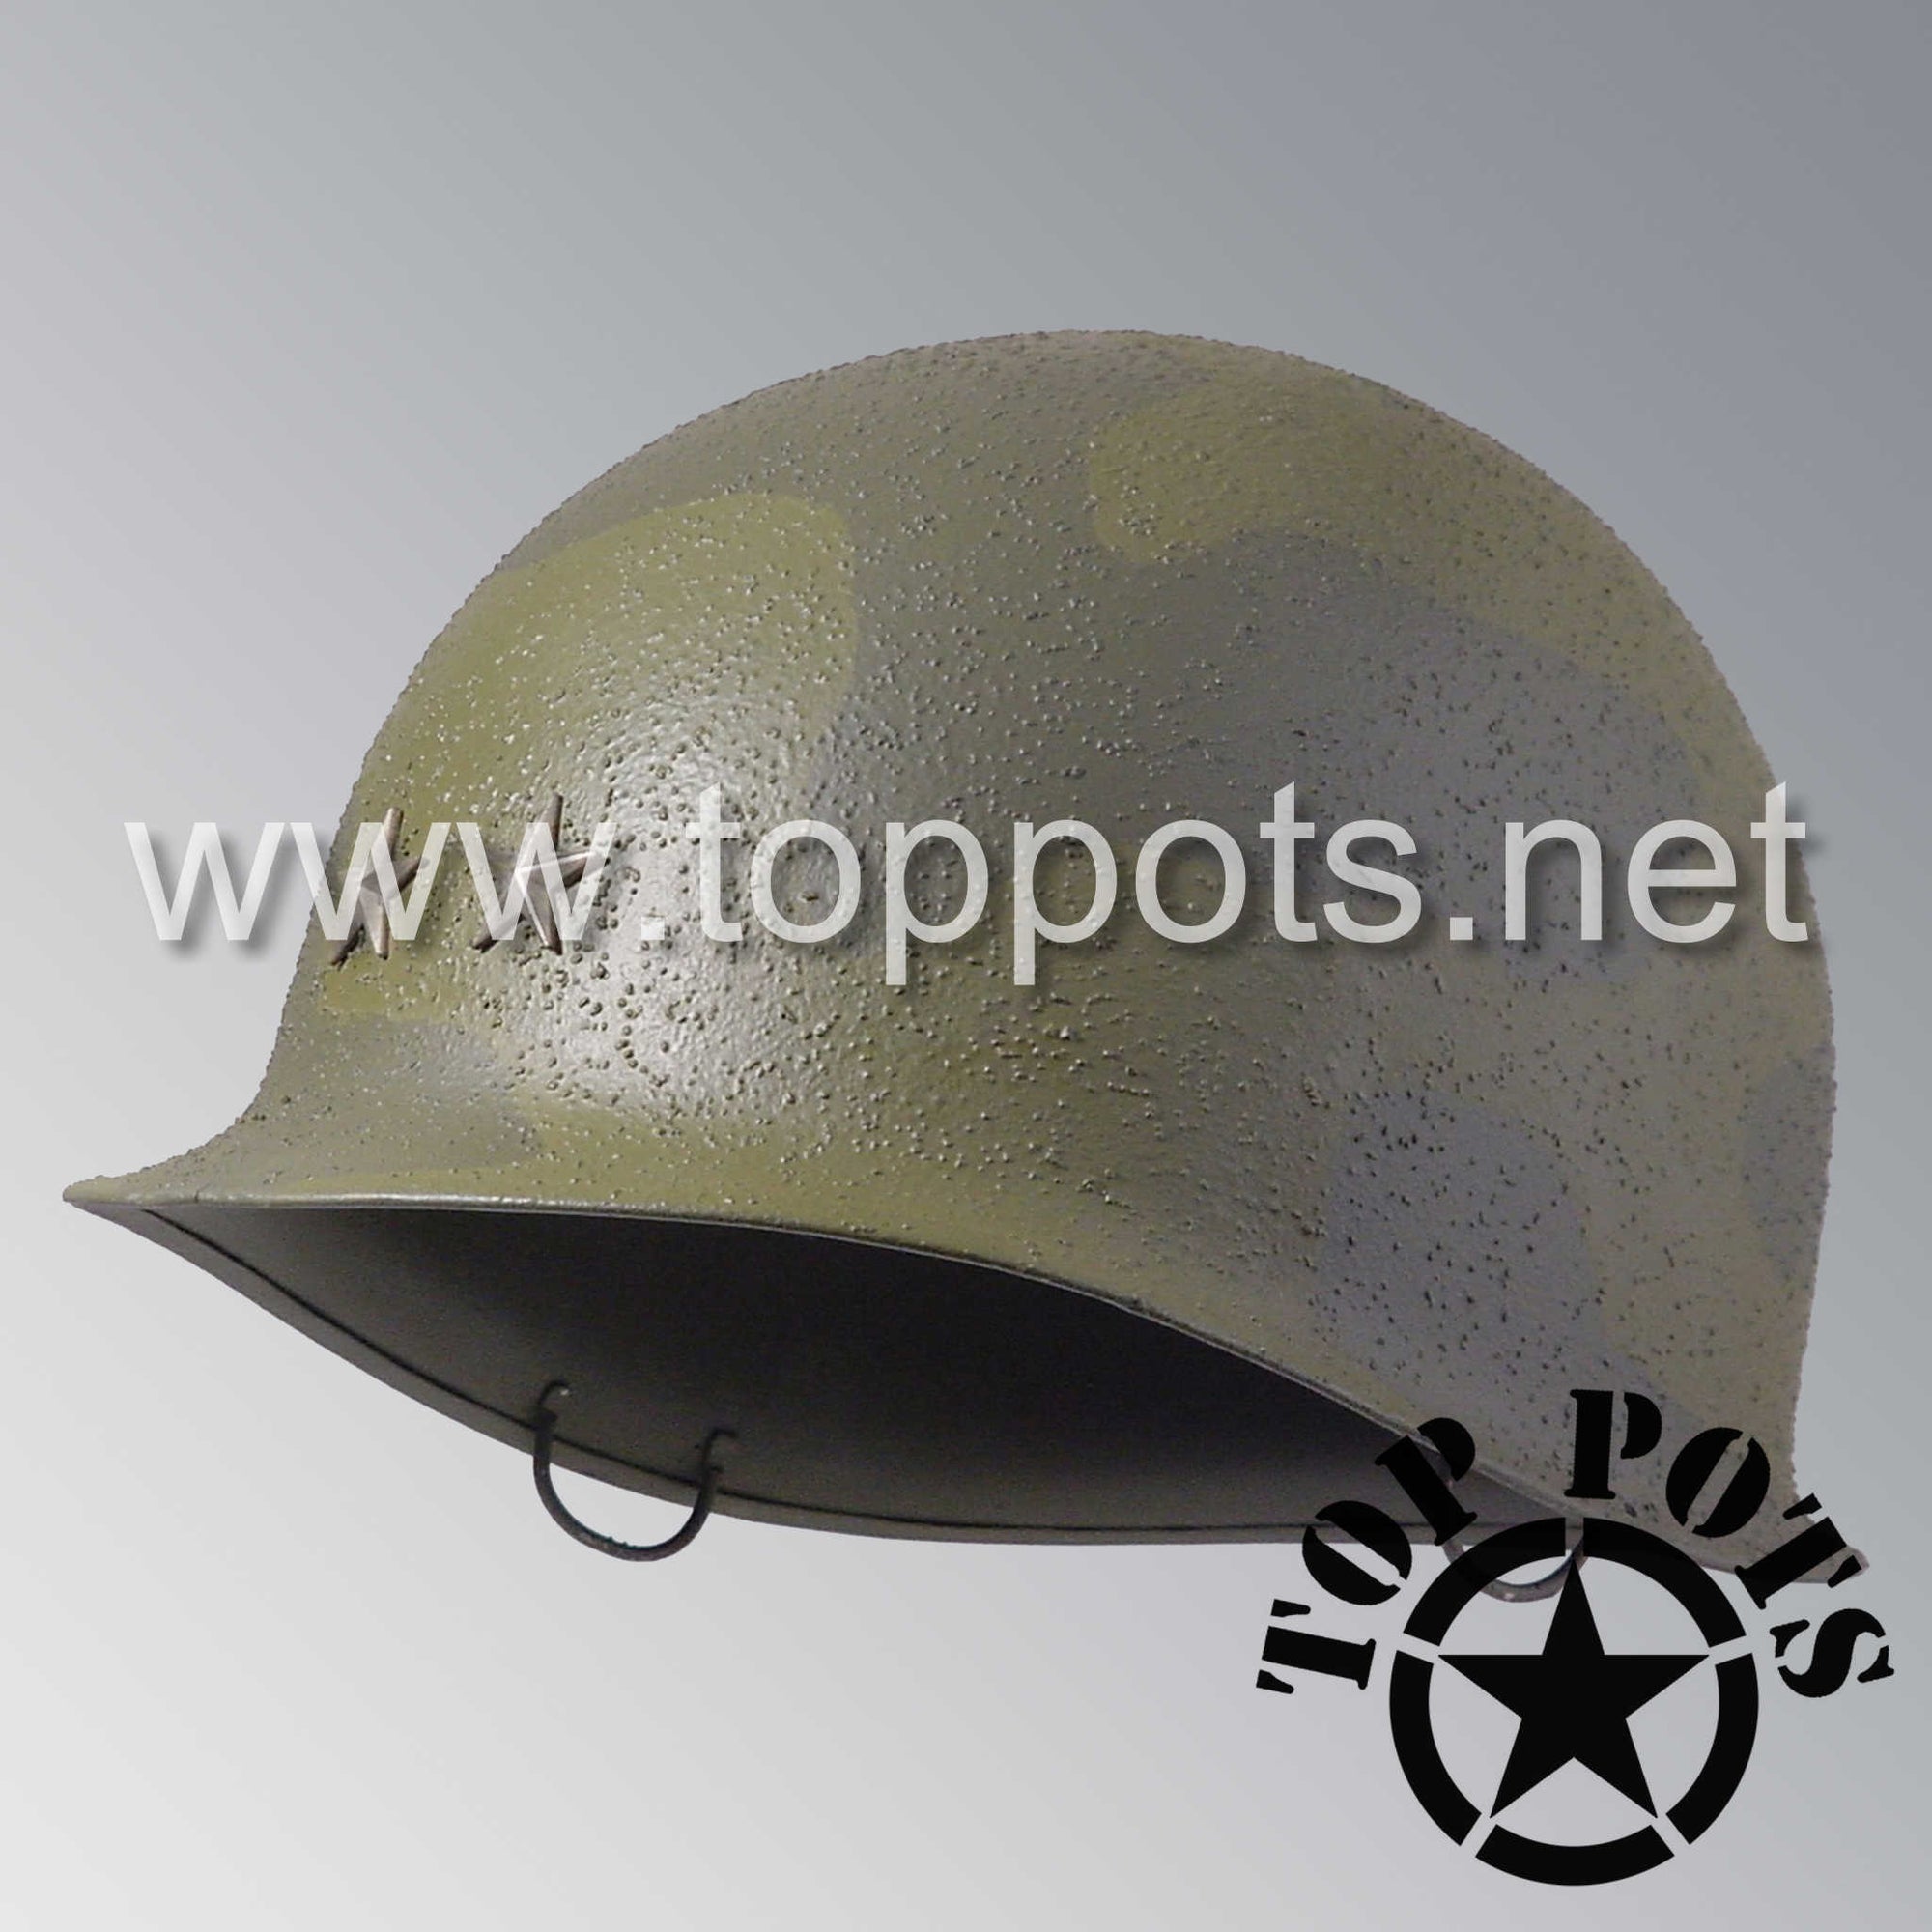 WWII US Army Restored Original M2 Paratrooper Airborne Helmet D Bale Shell with General Ridgeway 82nd Airborne Division Emblem